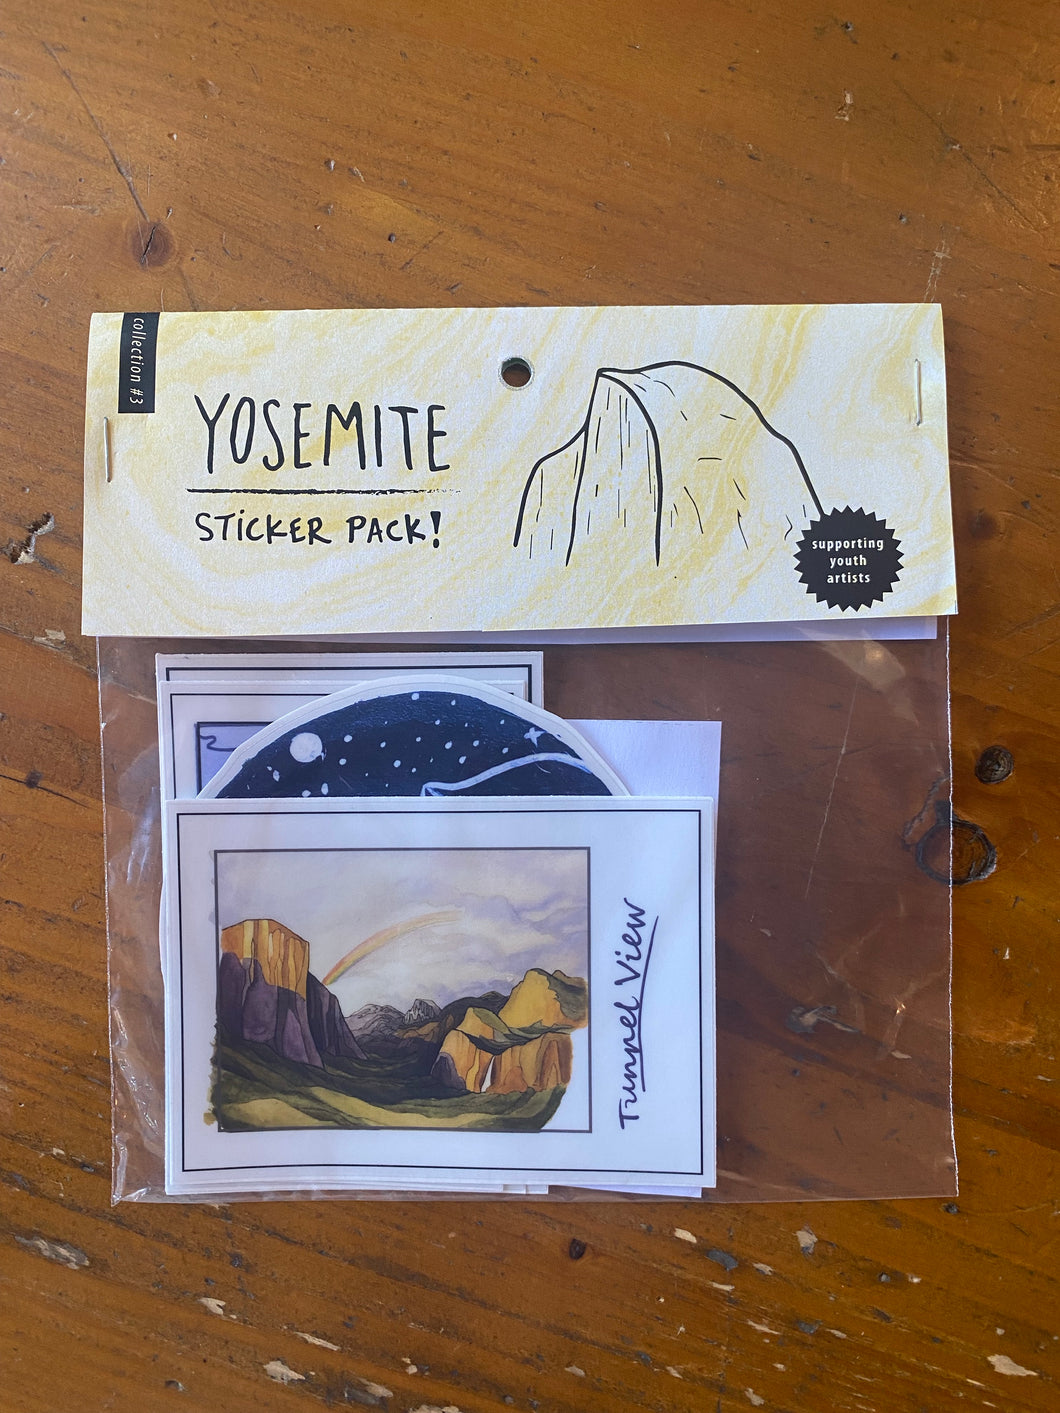 The Pathos Yosemite Sticker Pack